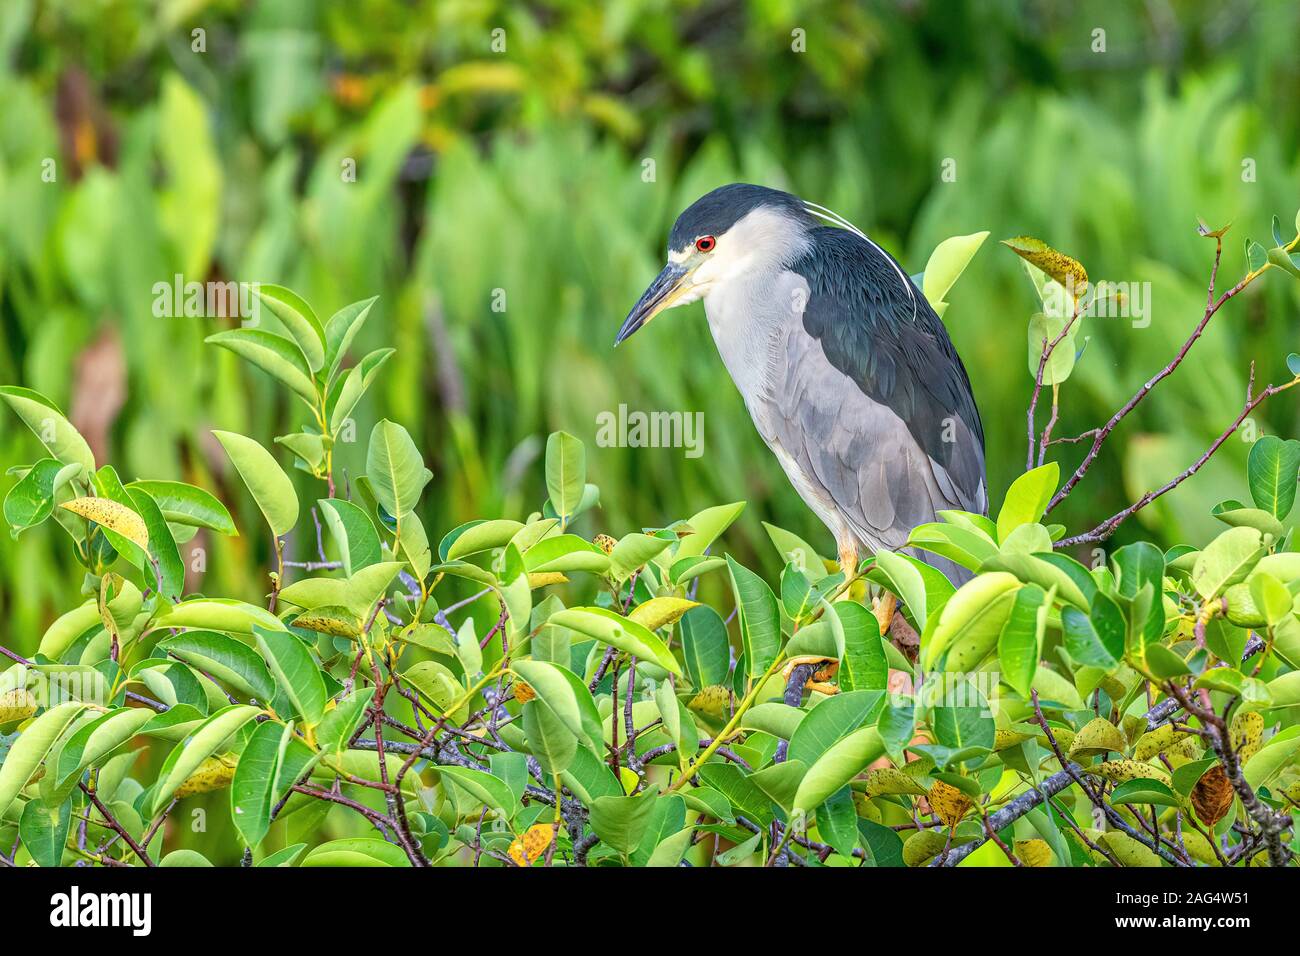 Black-crowned night heron standing on a bush Stock Photo